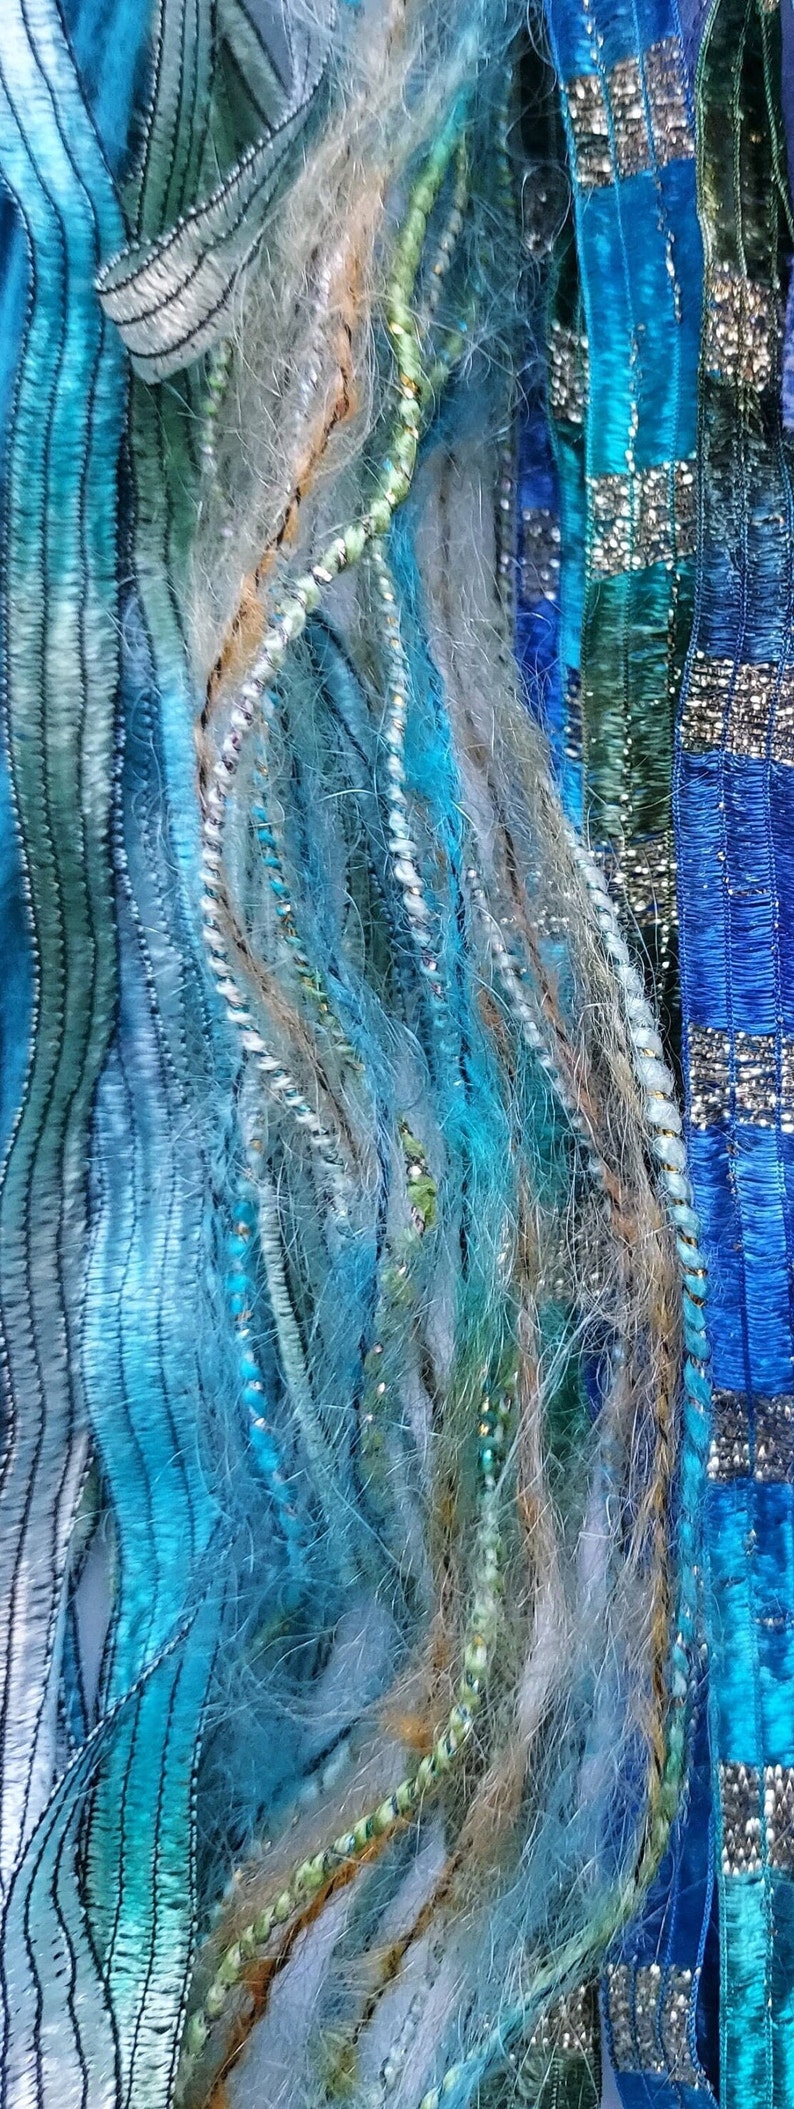 NEW Mermaid's Lair 20 yds. fiber art yarn bundle/embellishment trim 10X2/weaving/blue green teal yarn/junk journal/dreamcatcher DIY/fringe image 5